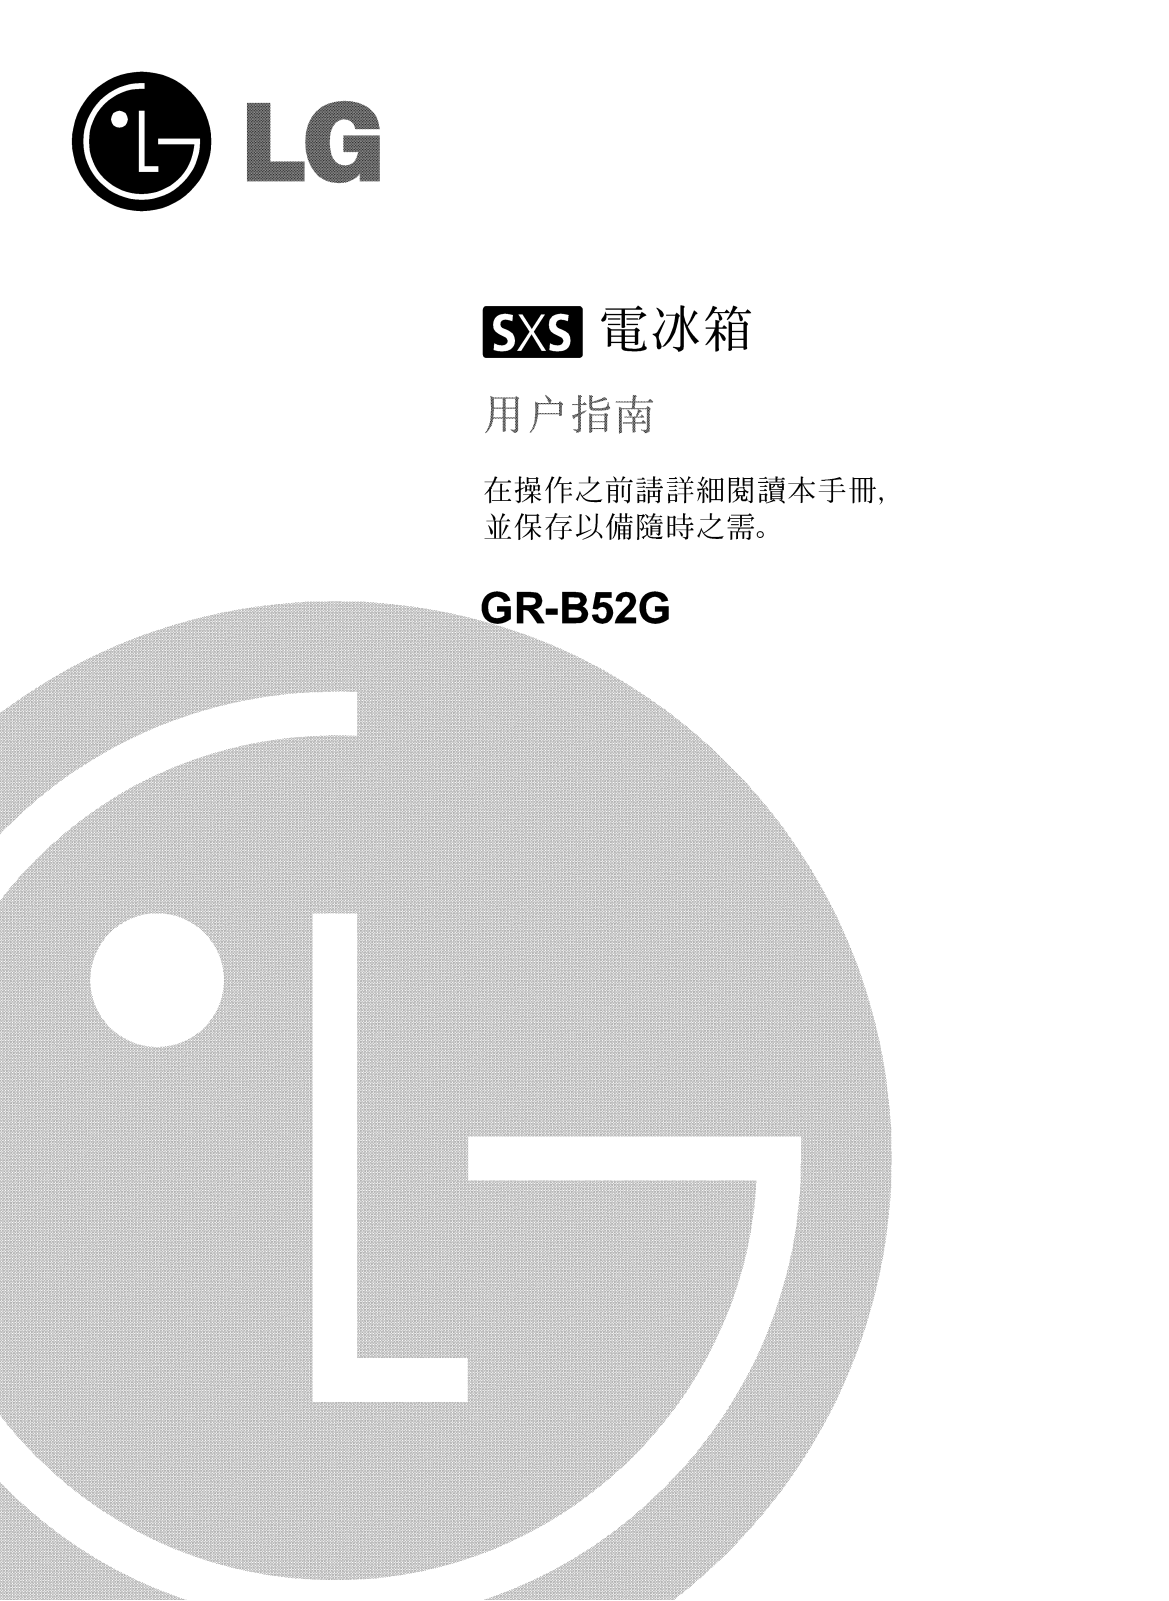 LG GR-B52G User Manual